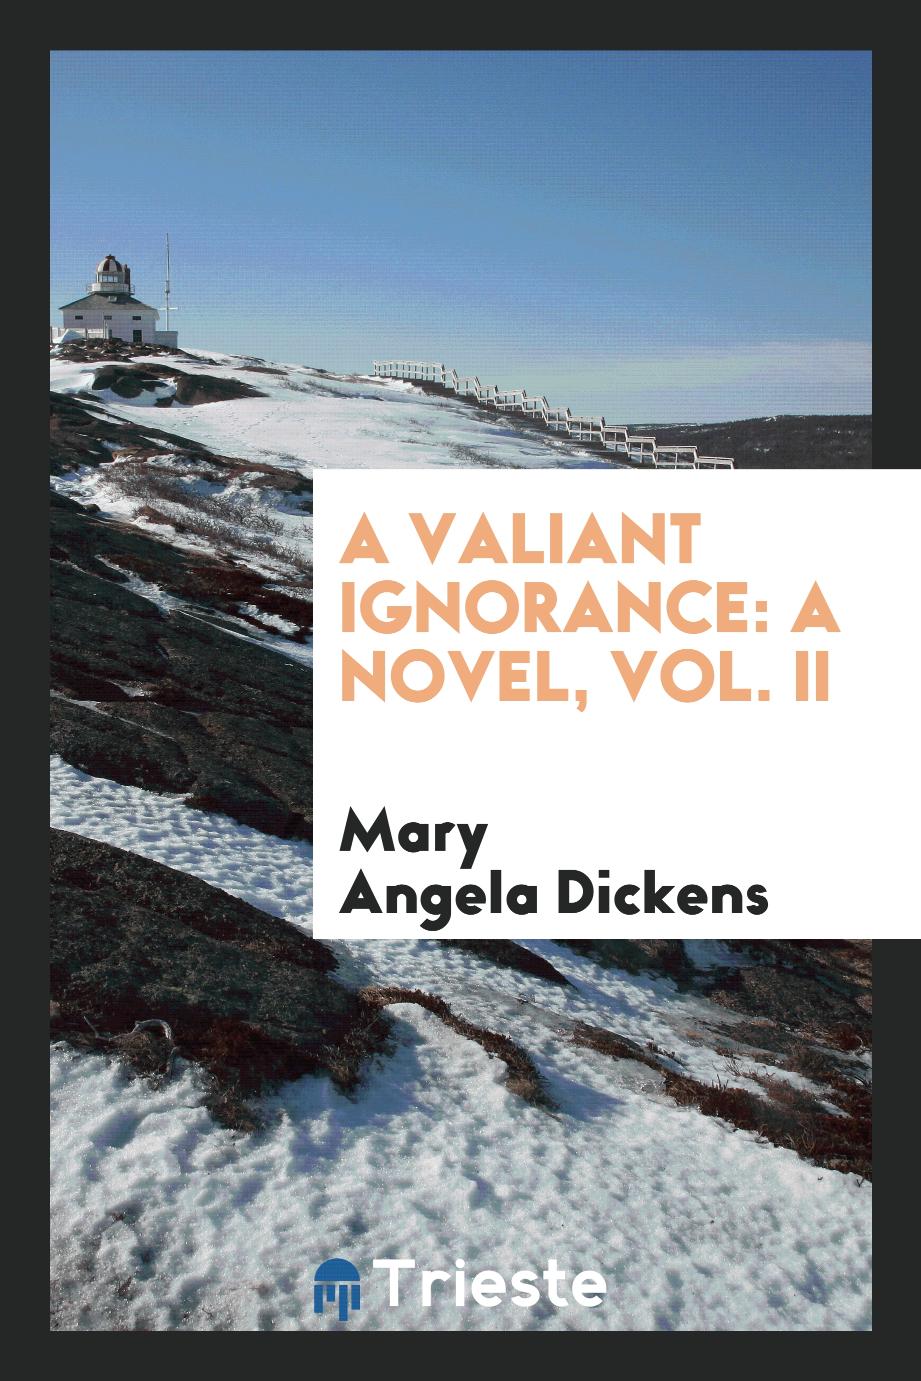 A Valiant Ignorance: A Novel, Vol. II